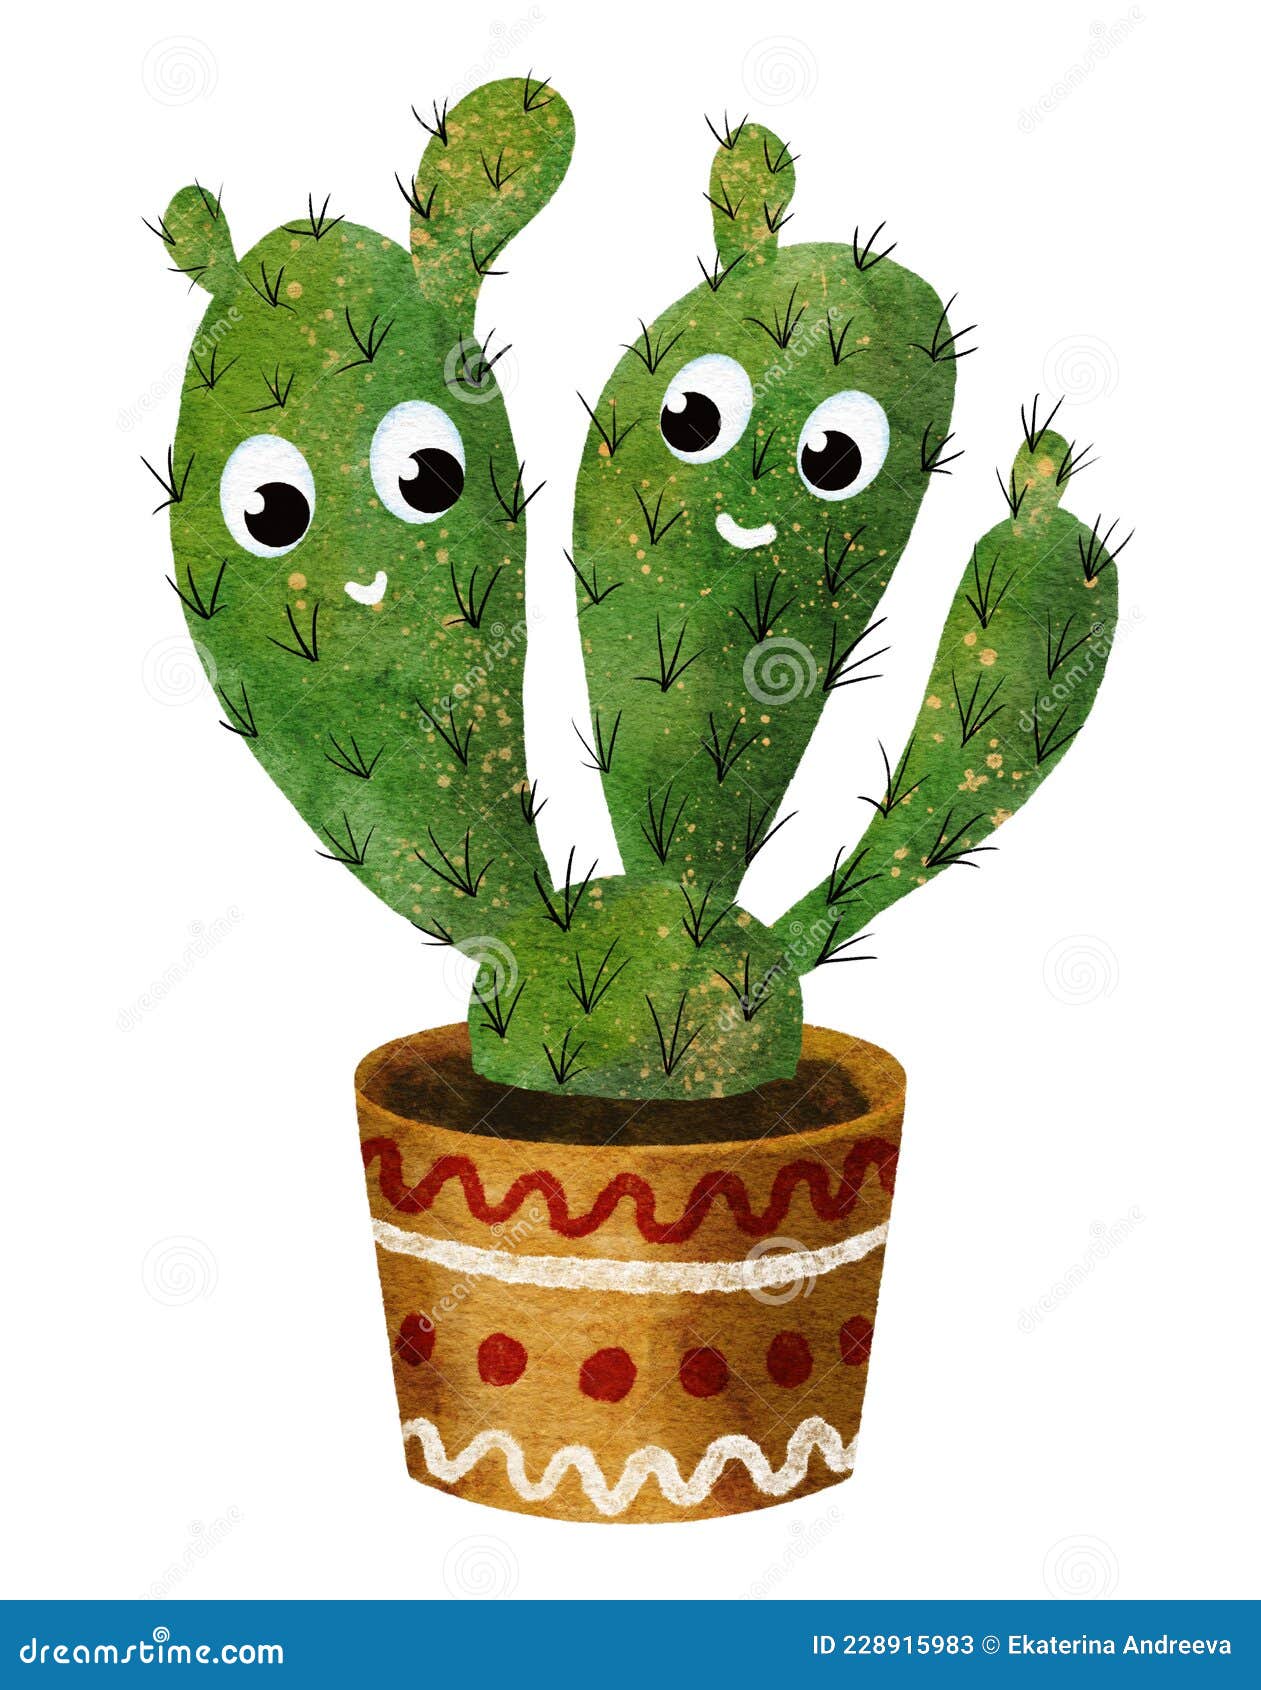 1,564 Cactus Cartoon Stock Photos - Free & Royalty-Free Stock Photos from  Dreamstime